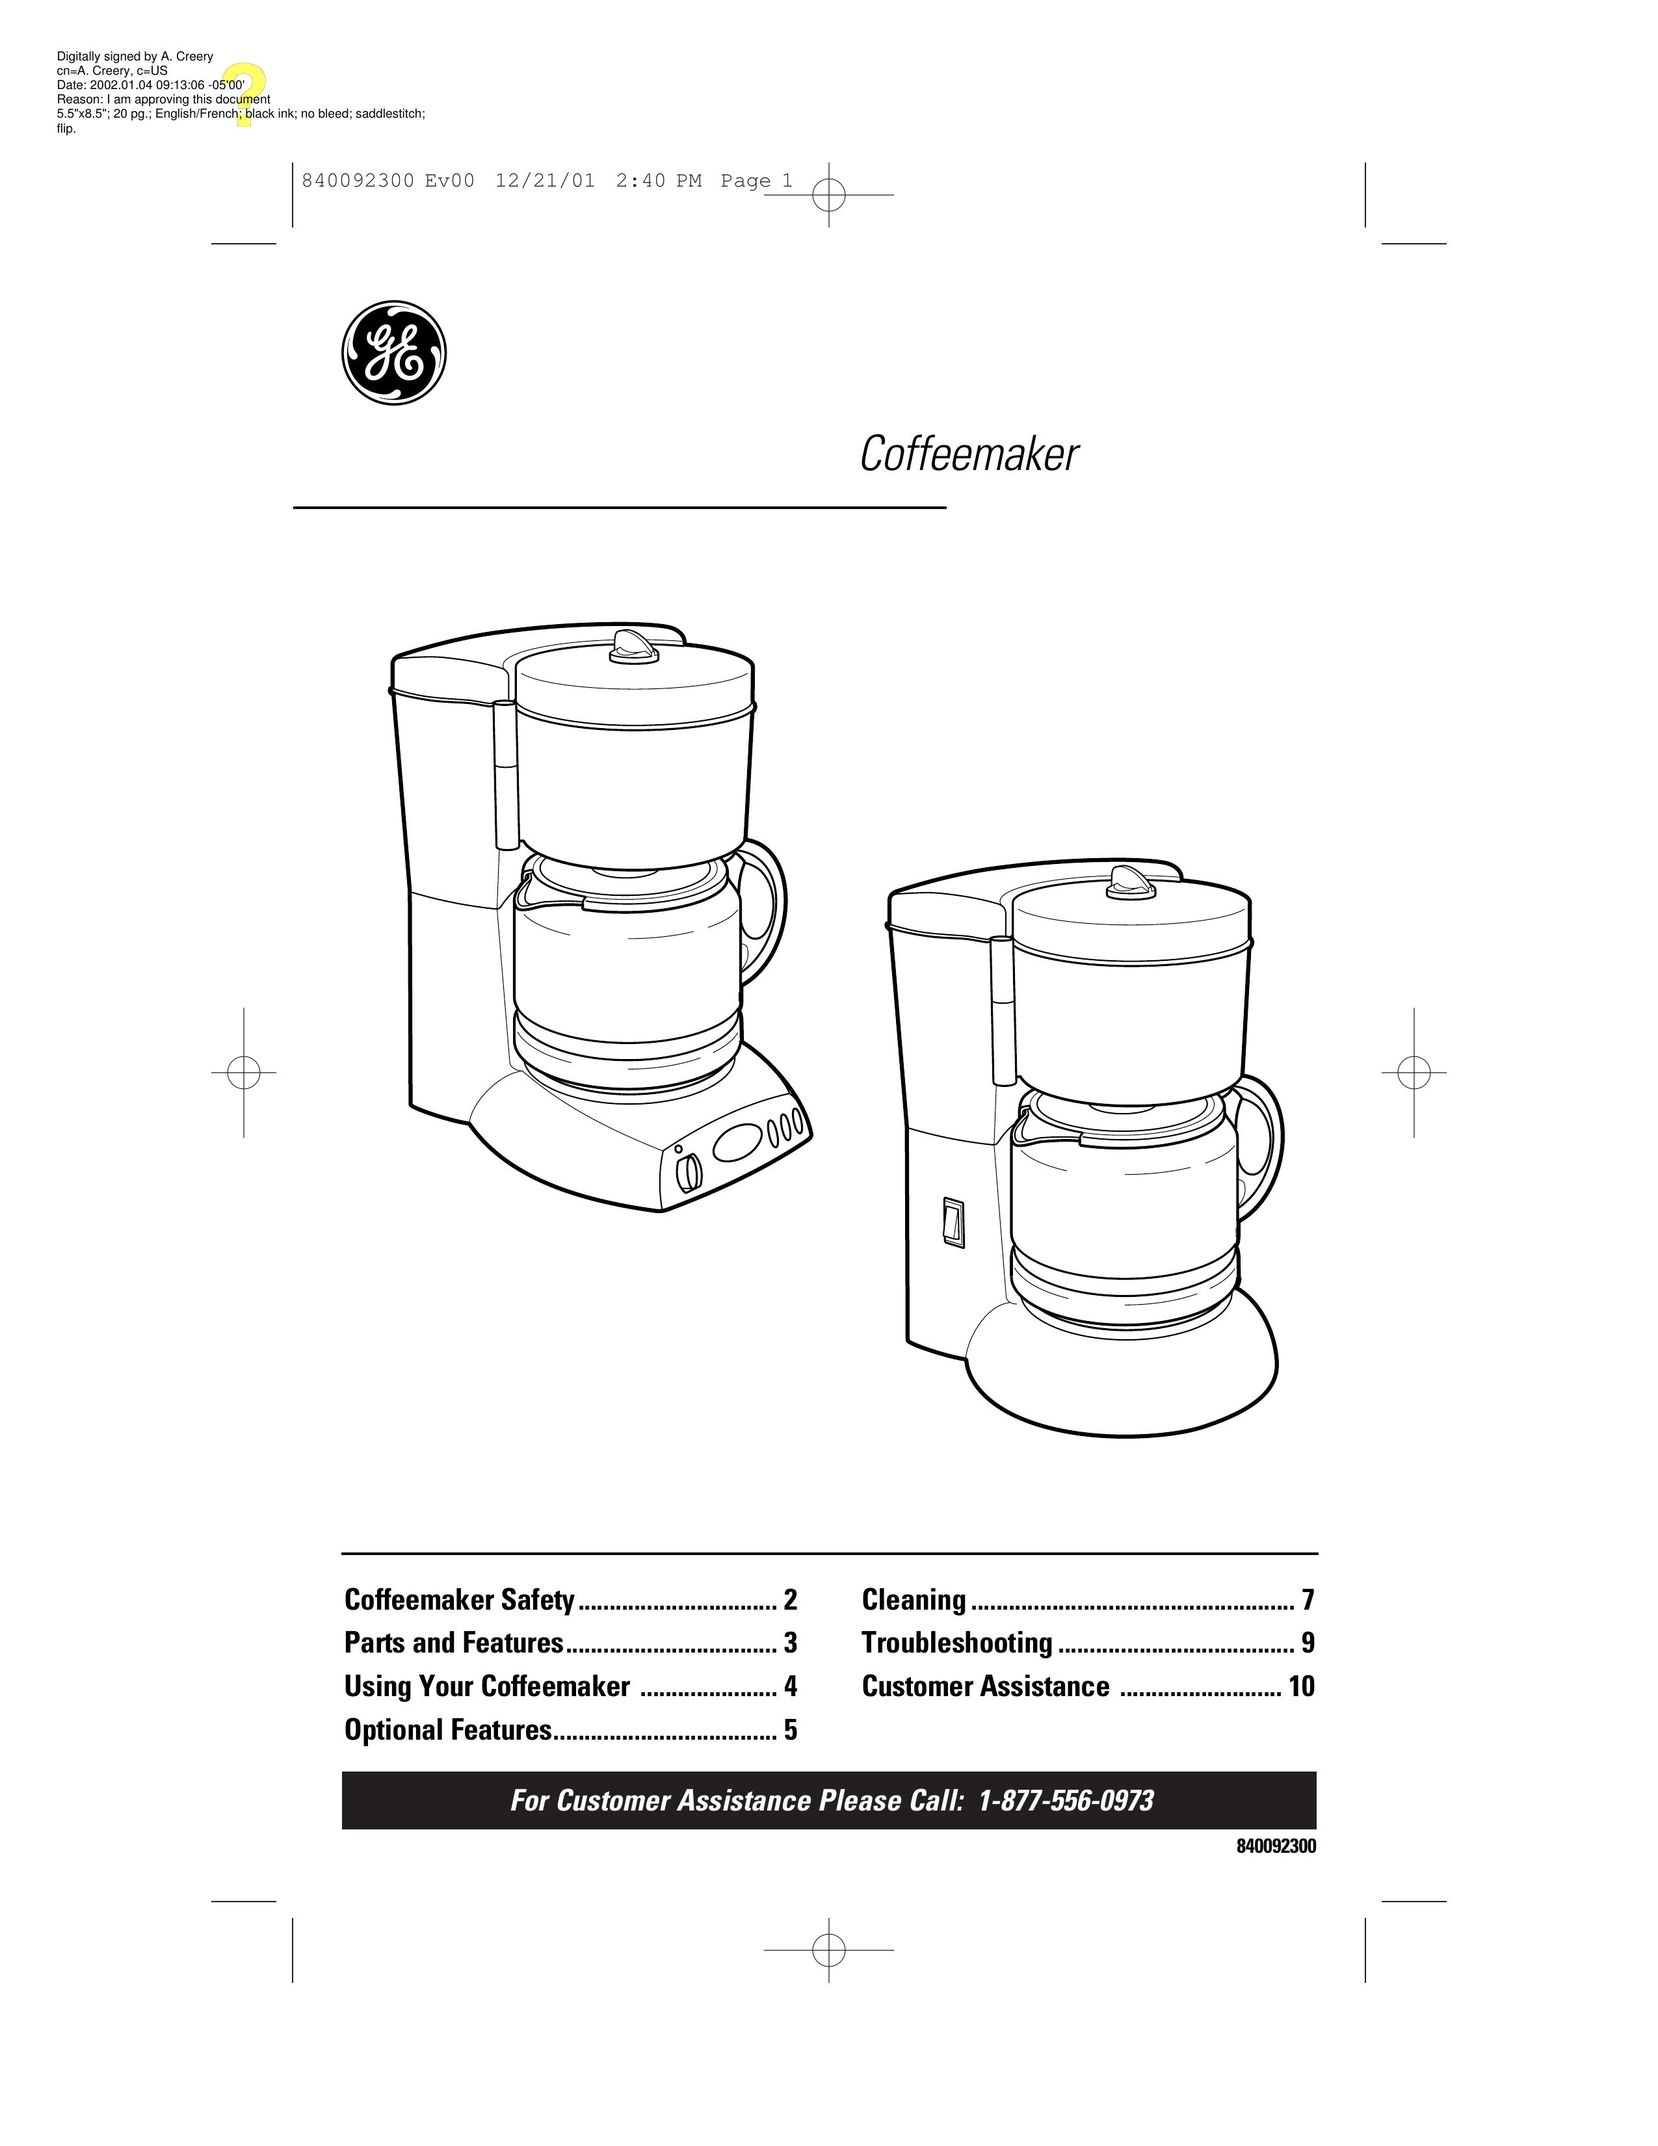 GE 840092300 Coffeemaker User Manual